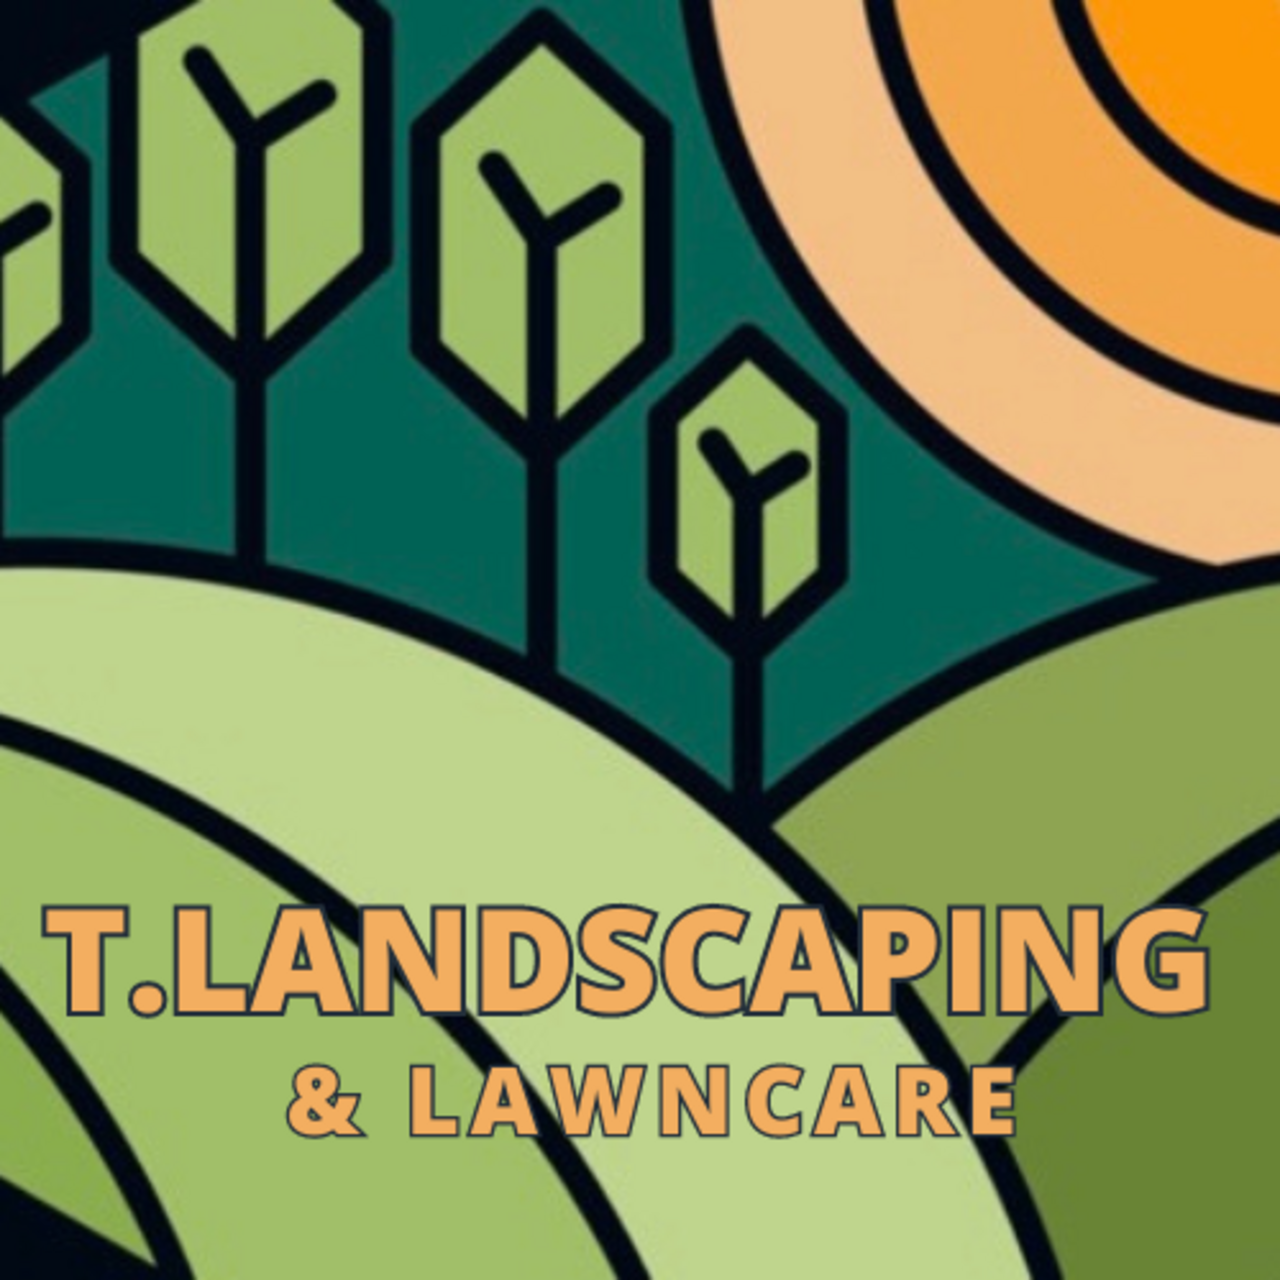 T Landscaping & Lawncare's logo